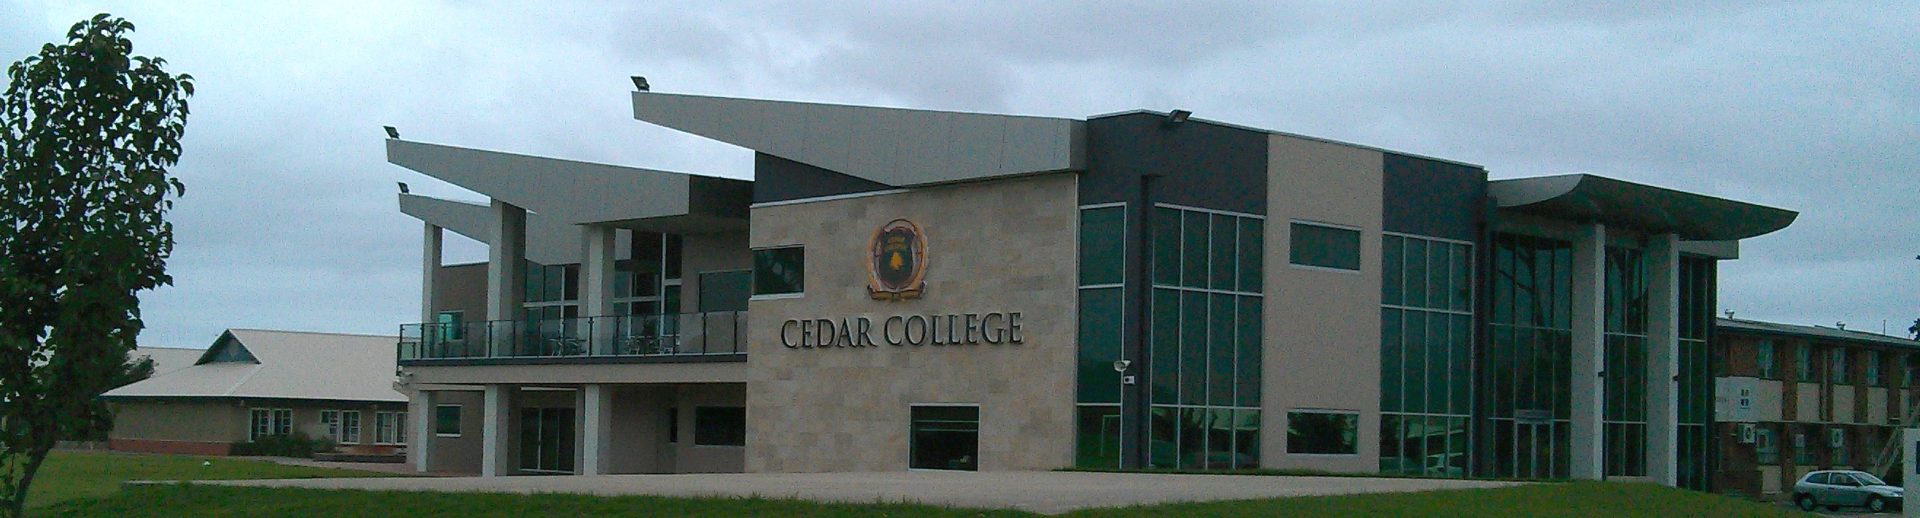 cedar college northgate administration building